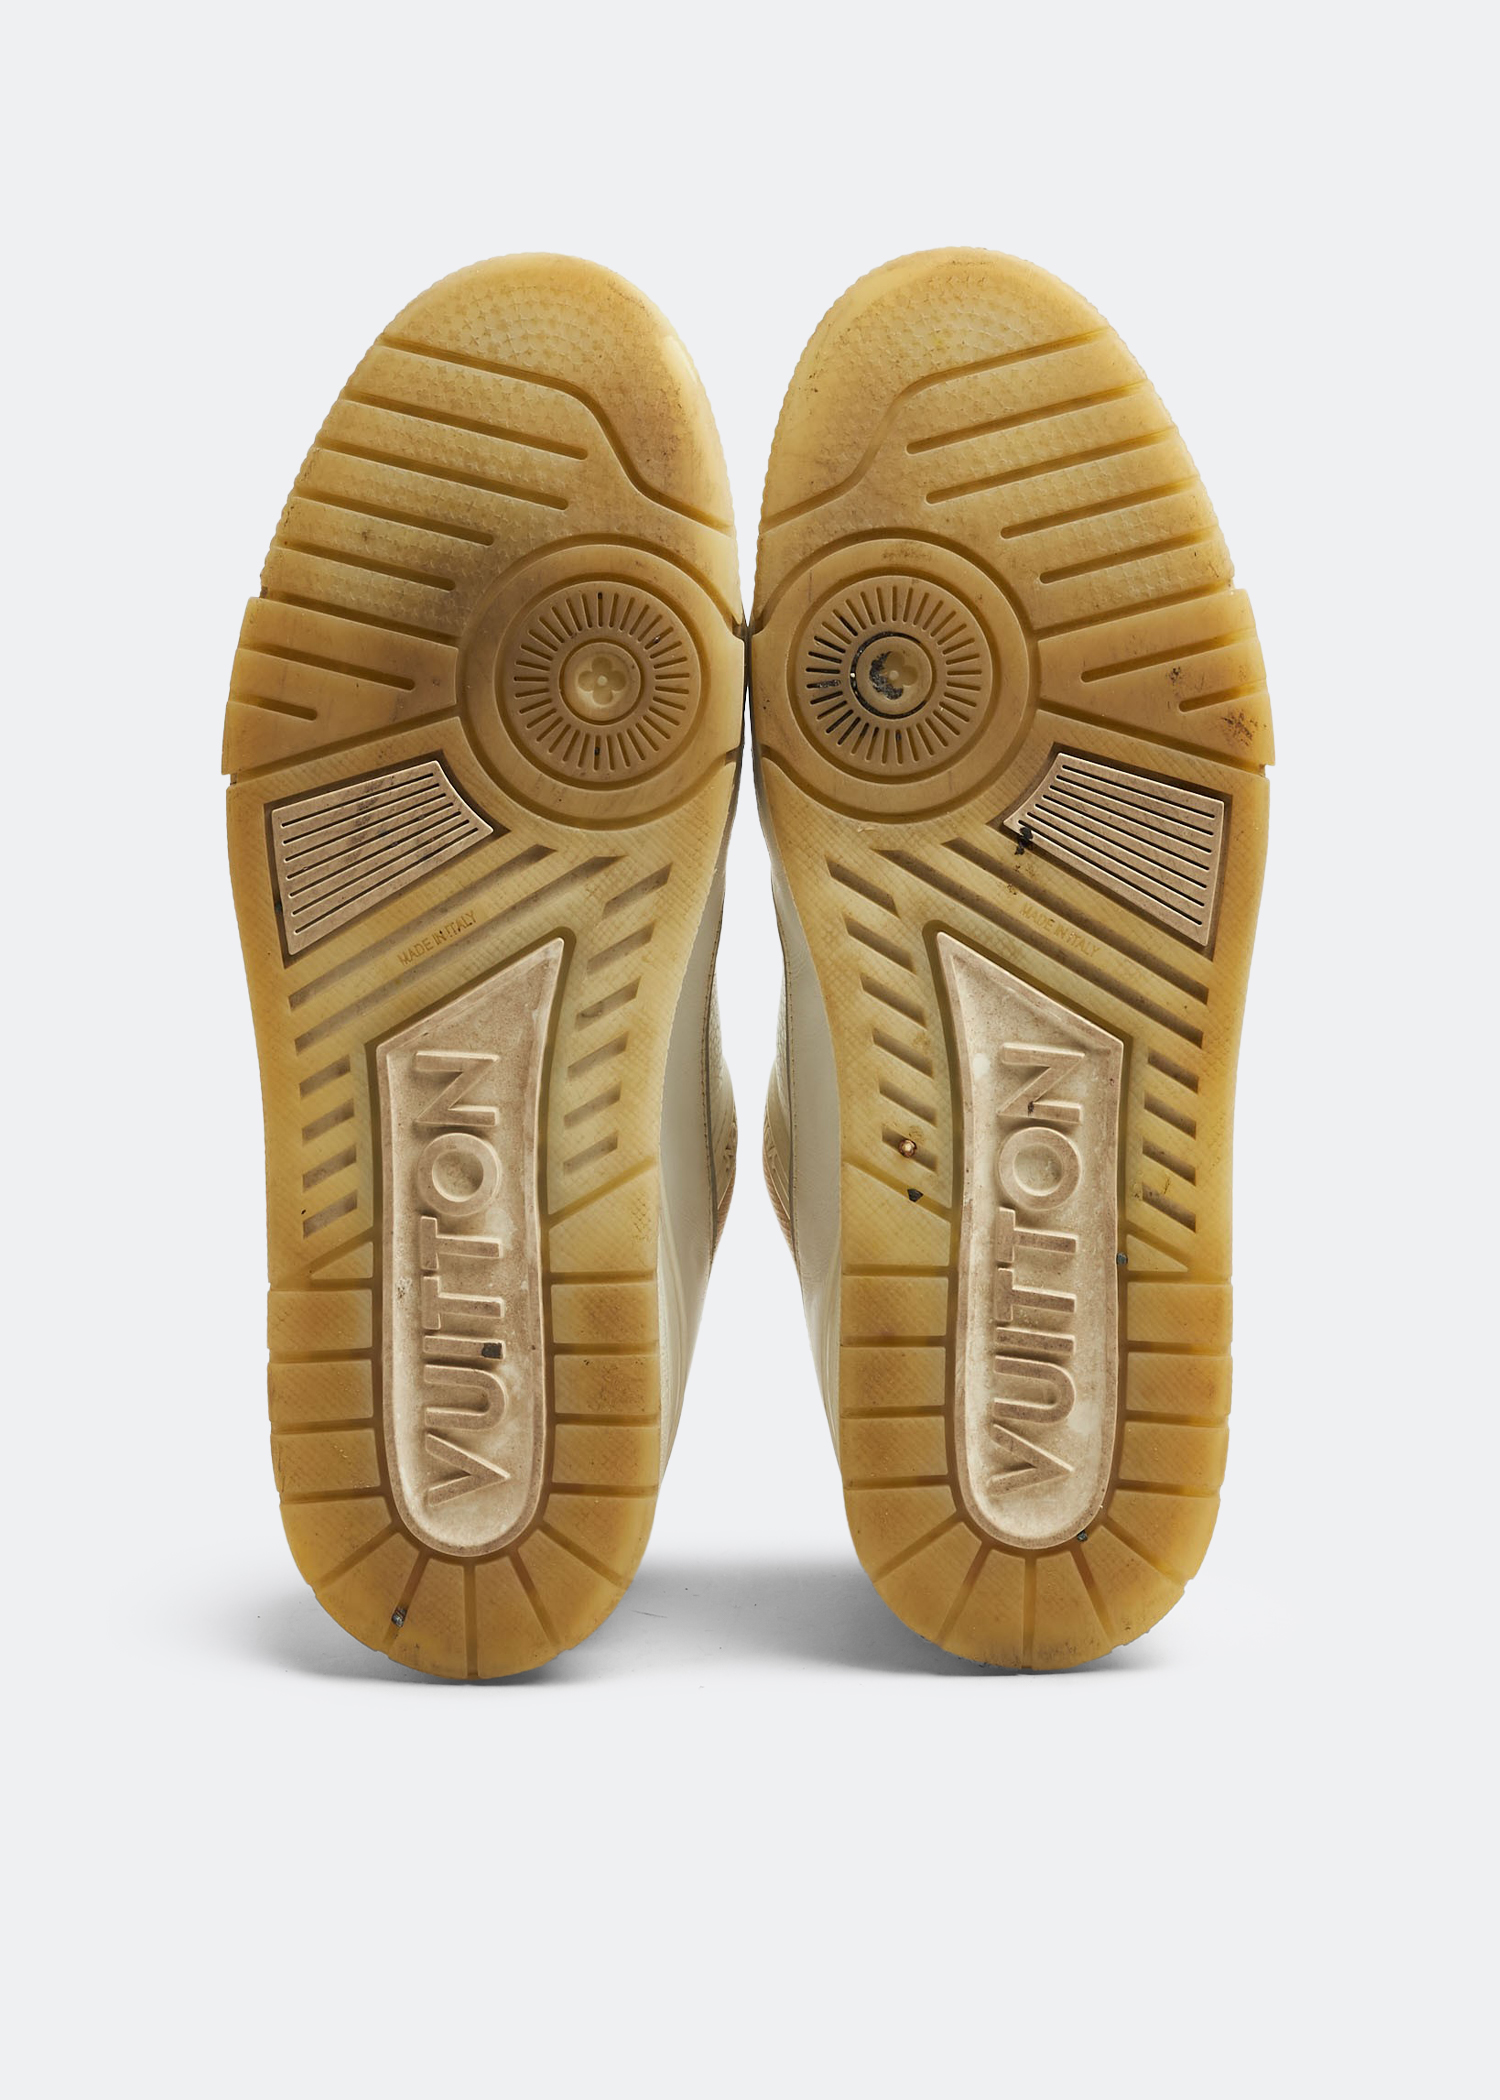 Louis Vuitton Pre-Loved Runner sneakers for Men - Black in Kuwait